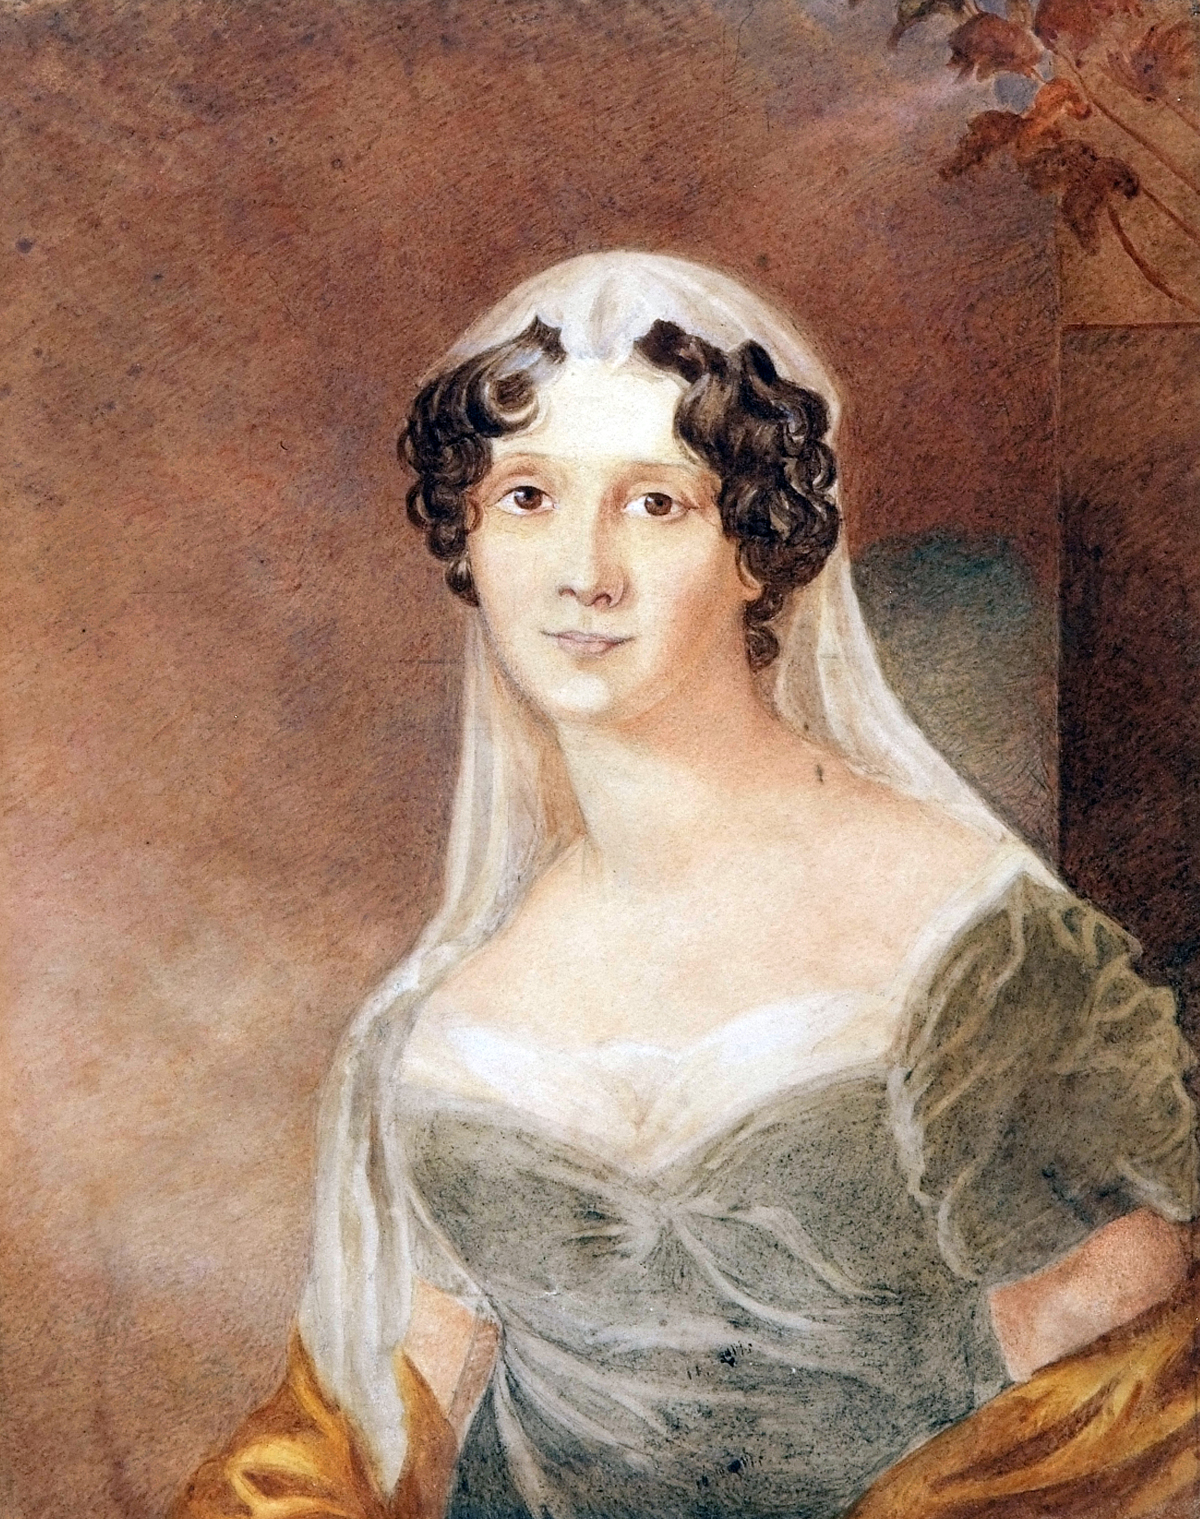 ATTRIBUTED TO JOHN THIRTLE (1777-1839, BRITISH) 
Portrait of Anne Preston
watercolour
12 x 9 ½